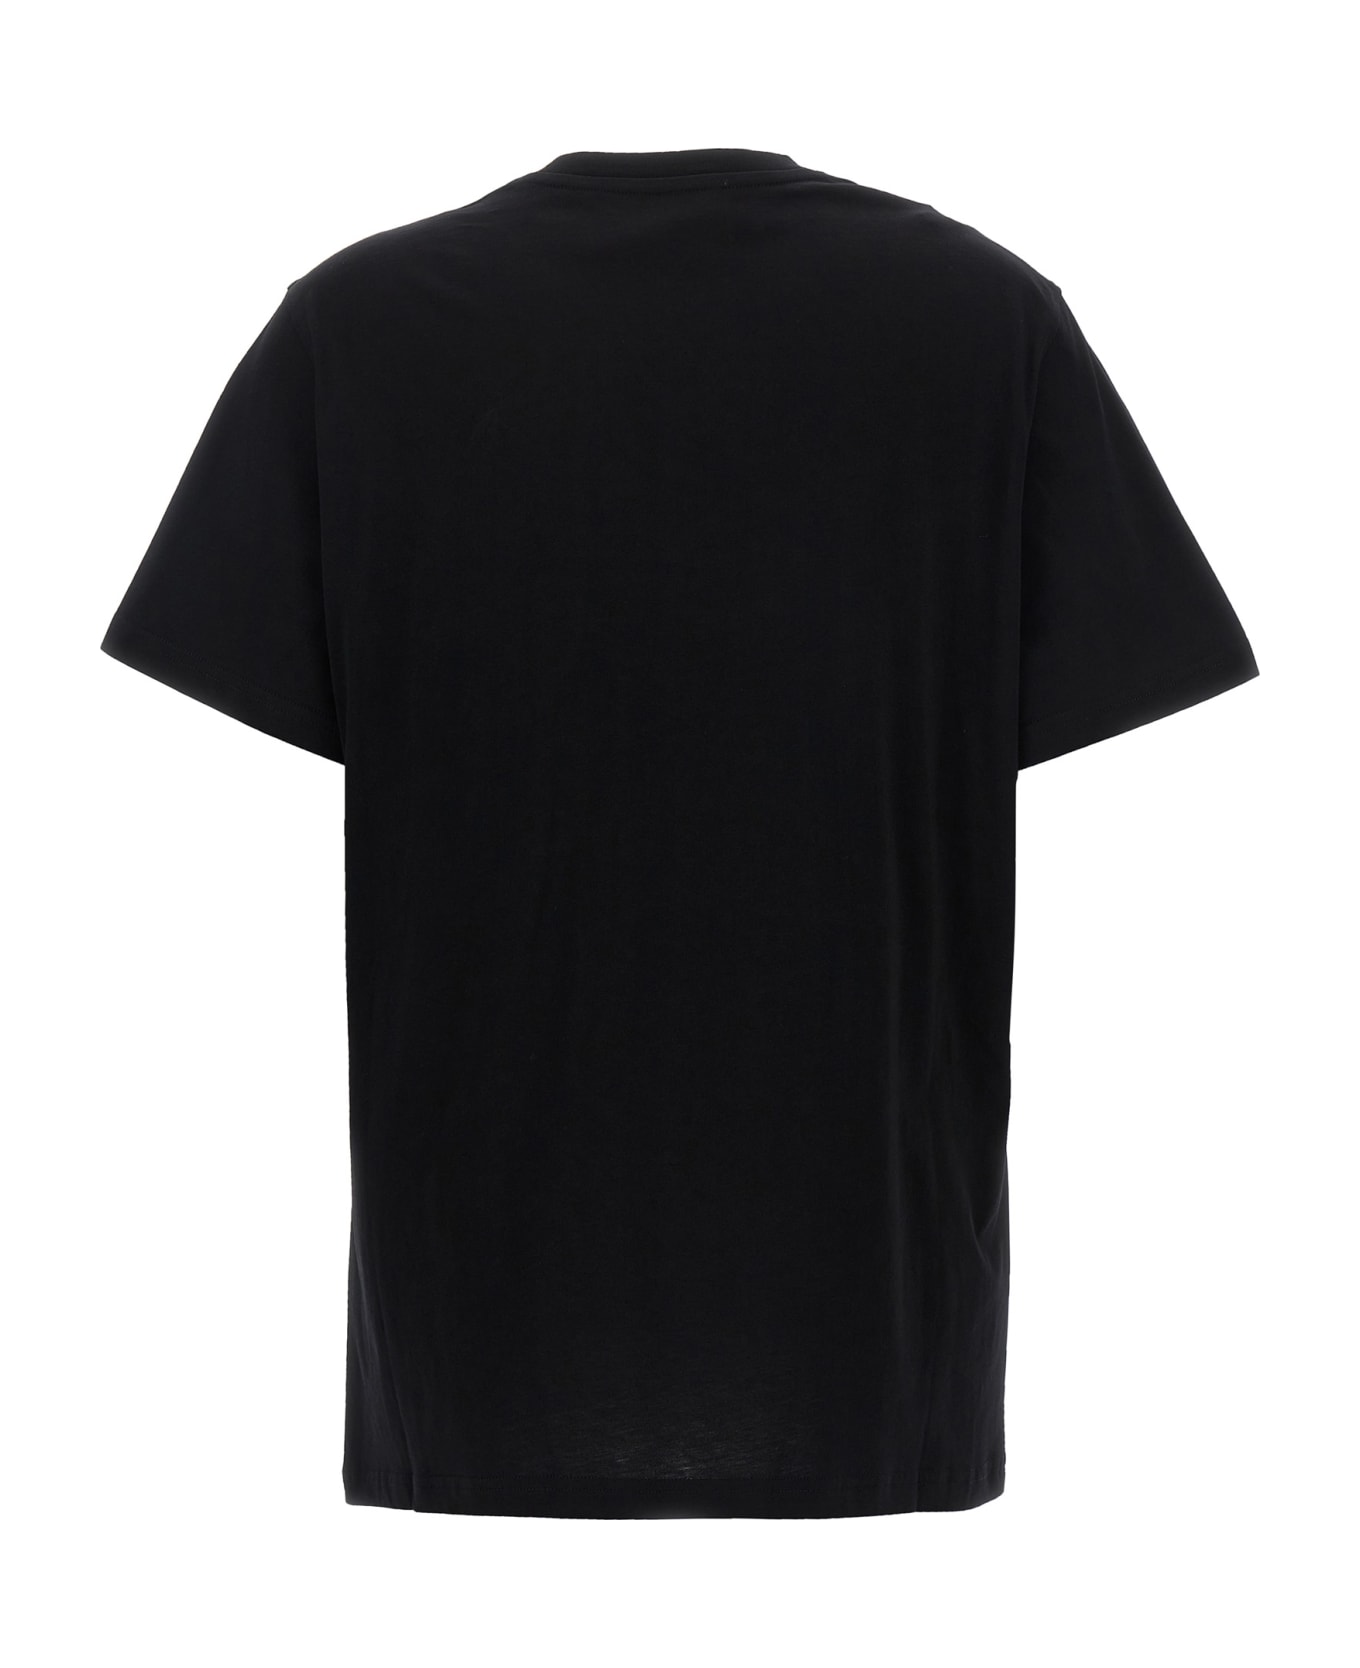 Moschino 'in Love We Trust' T-shirt - Black   Tシャツ